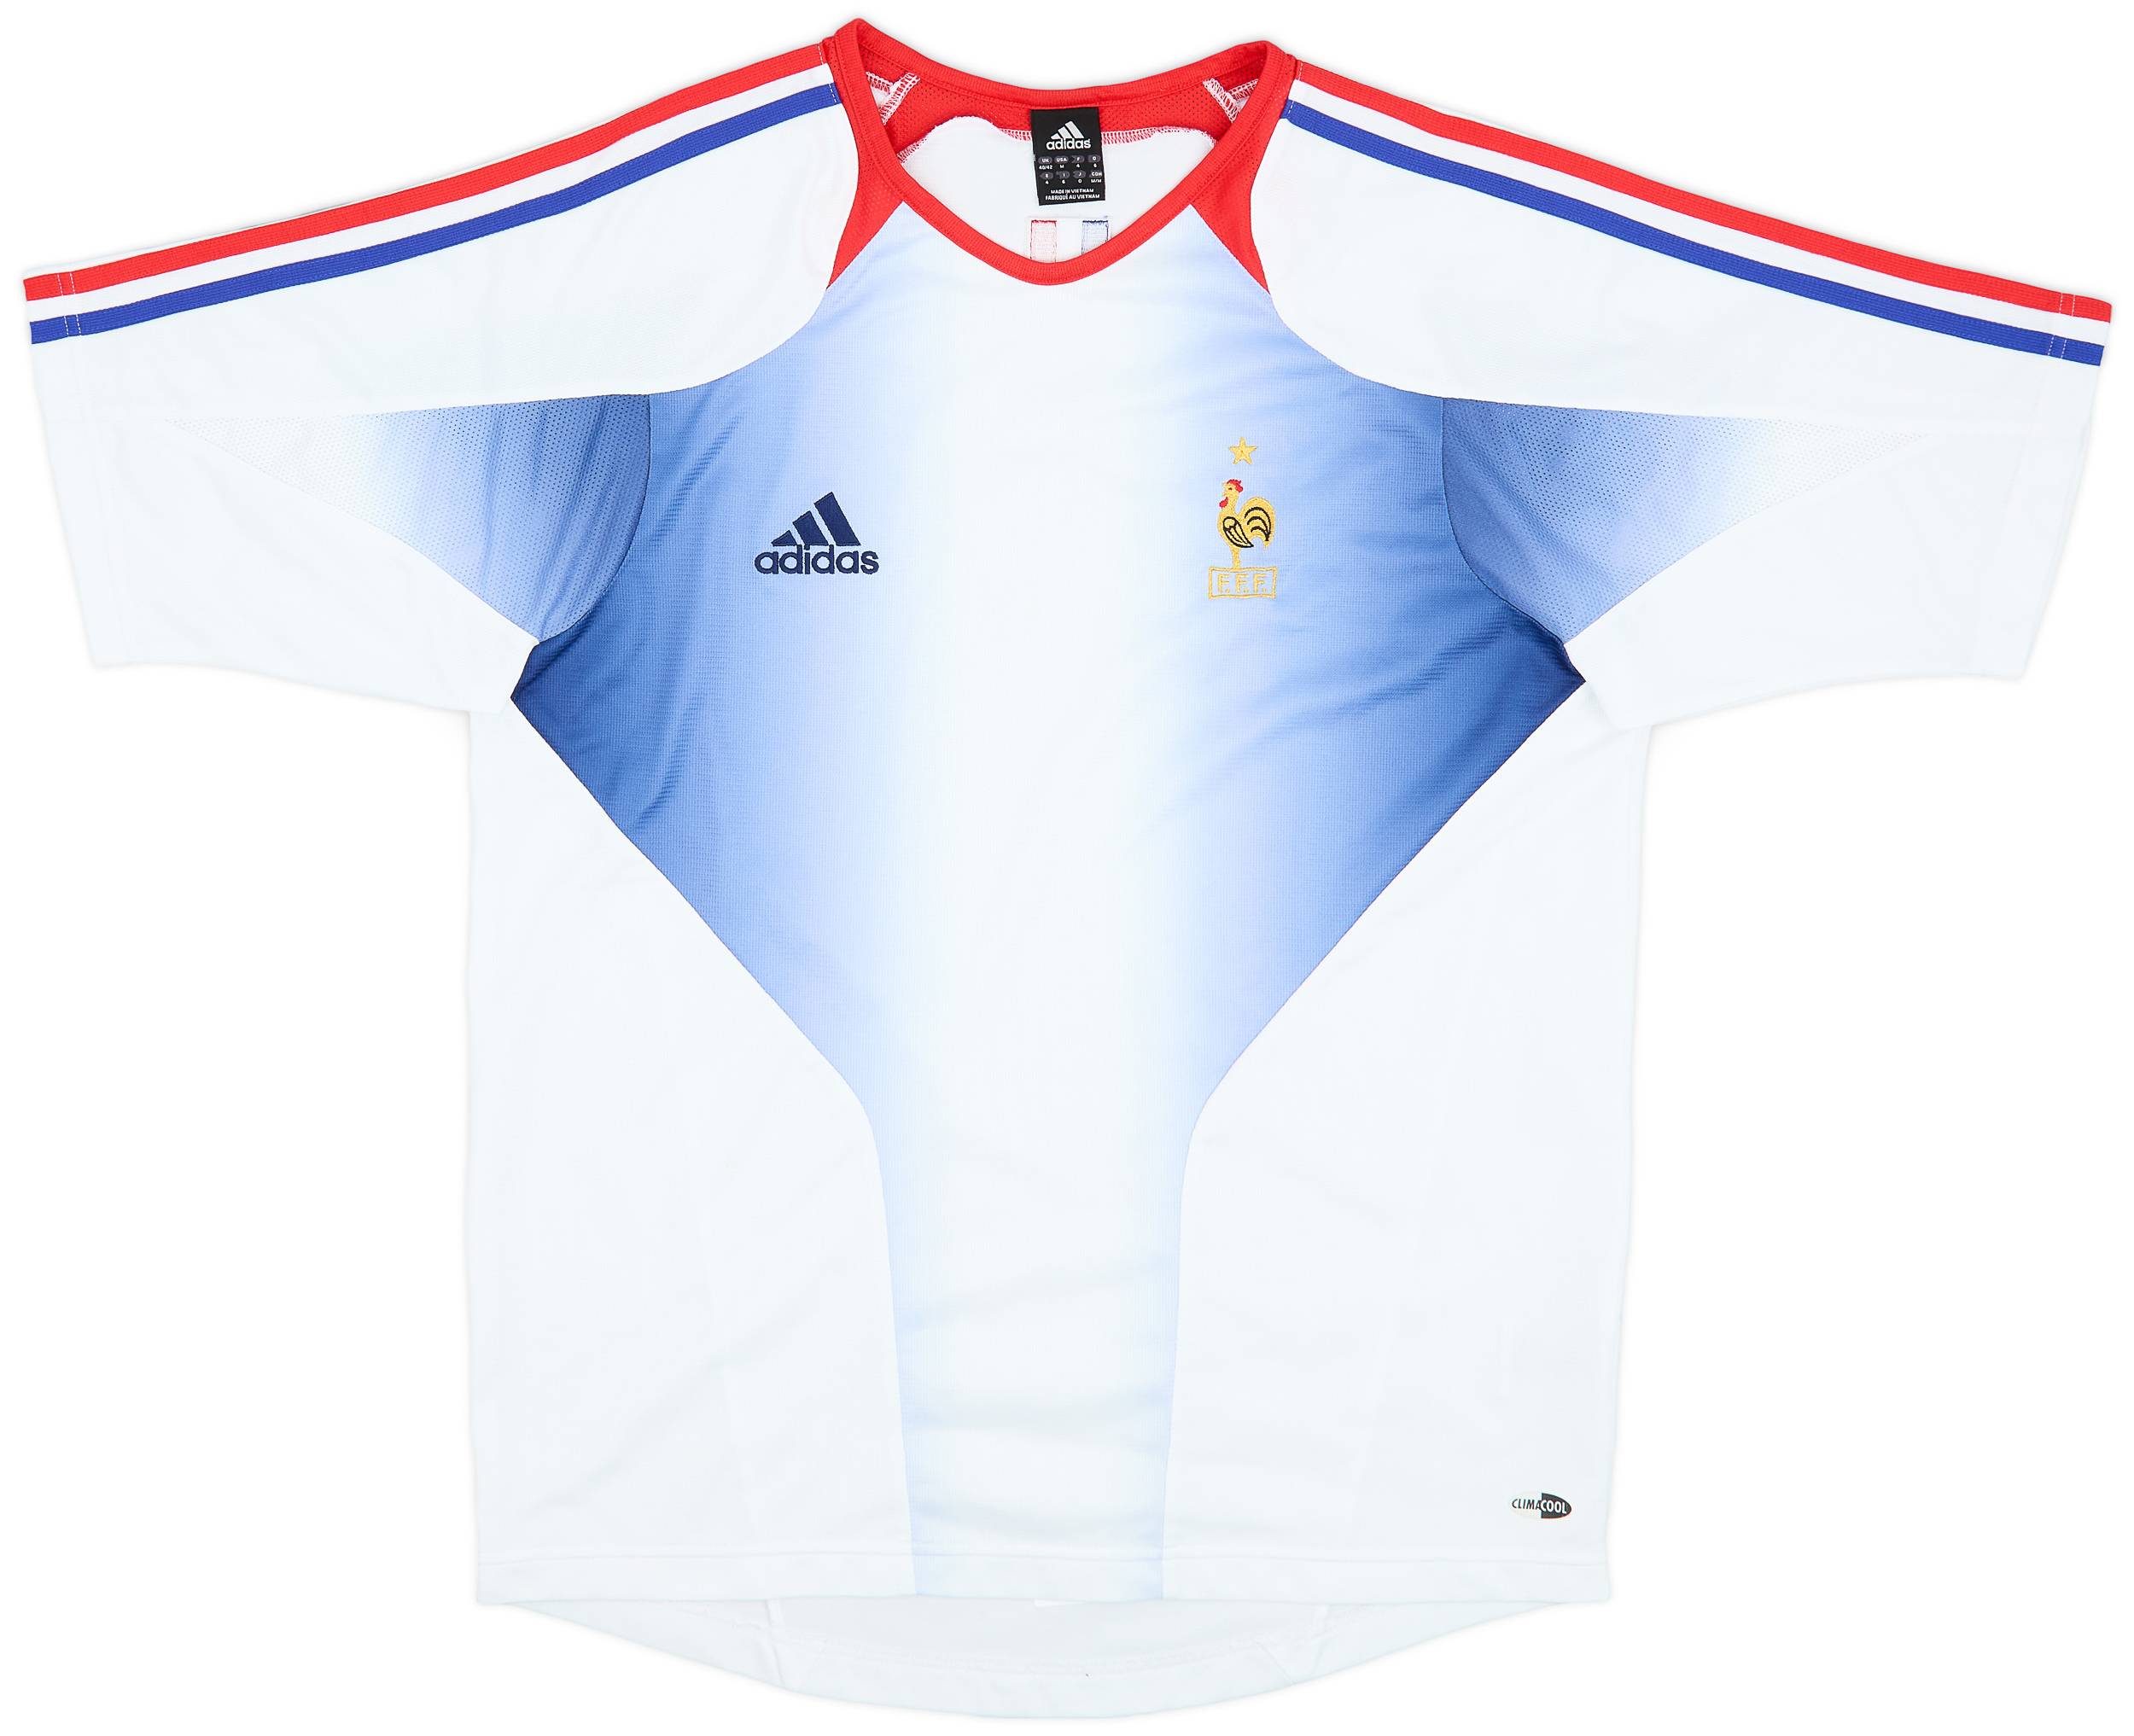 2004-06 France adidas Training Shirt - 9/10 - (M/L)